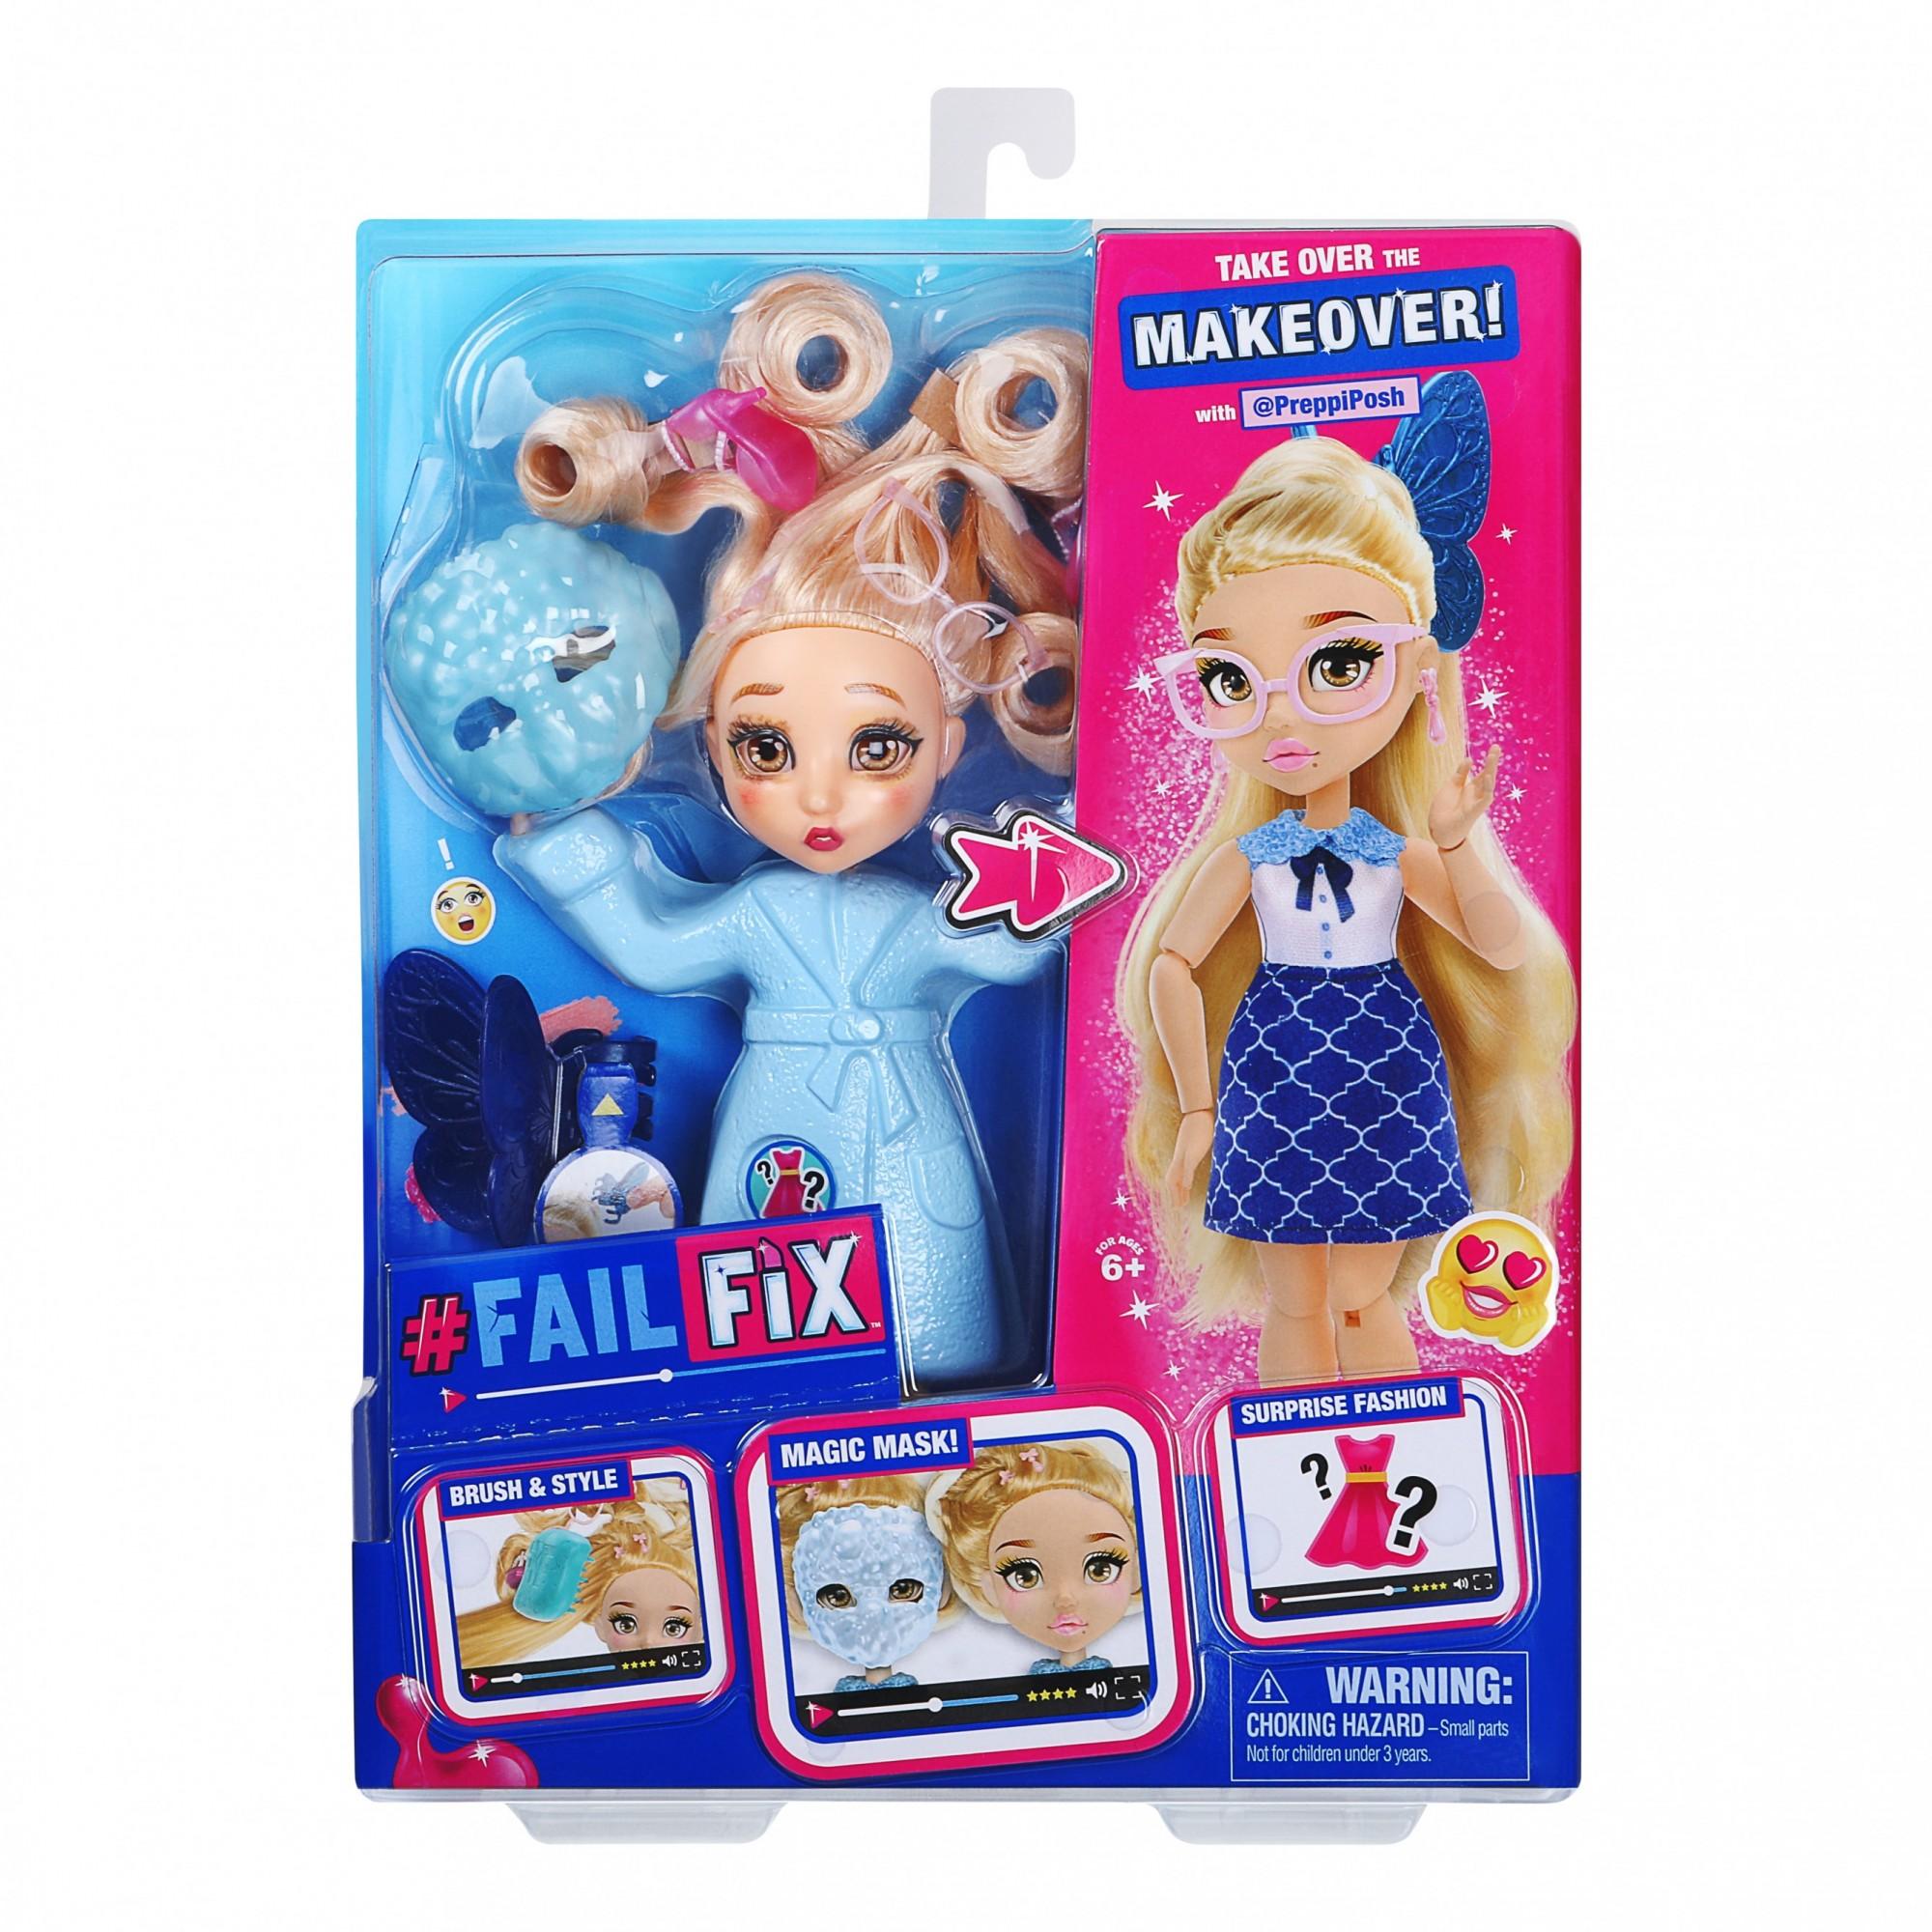 FailFix - Preppi.Posh Total Makeover Doll Pack - 8.5" inch Fashion Doll, Girls 6+ - image 2 of 11